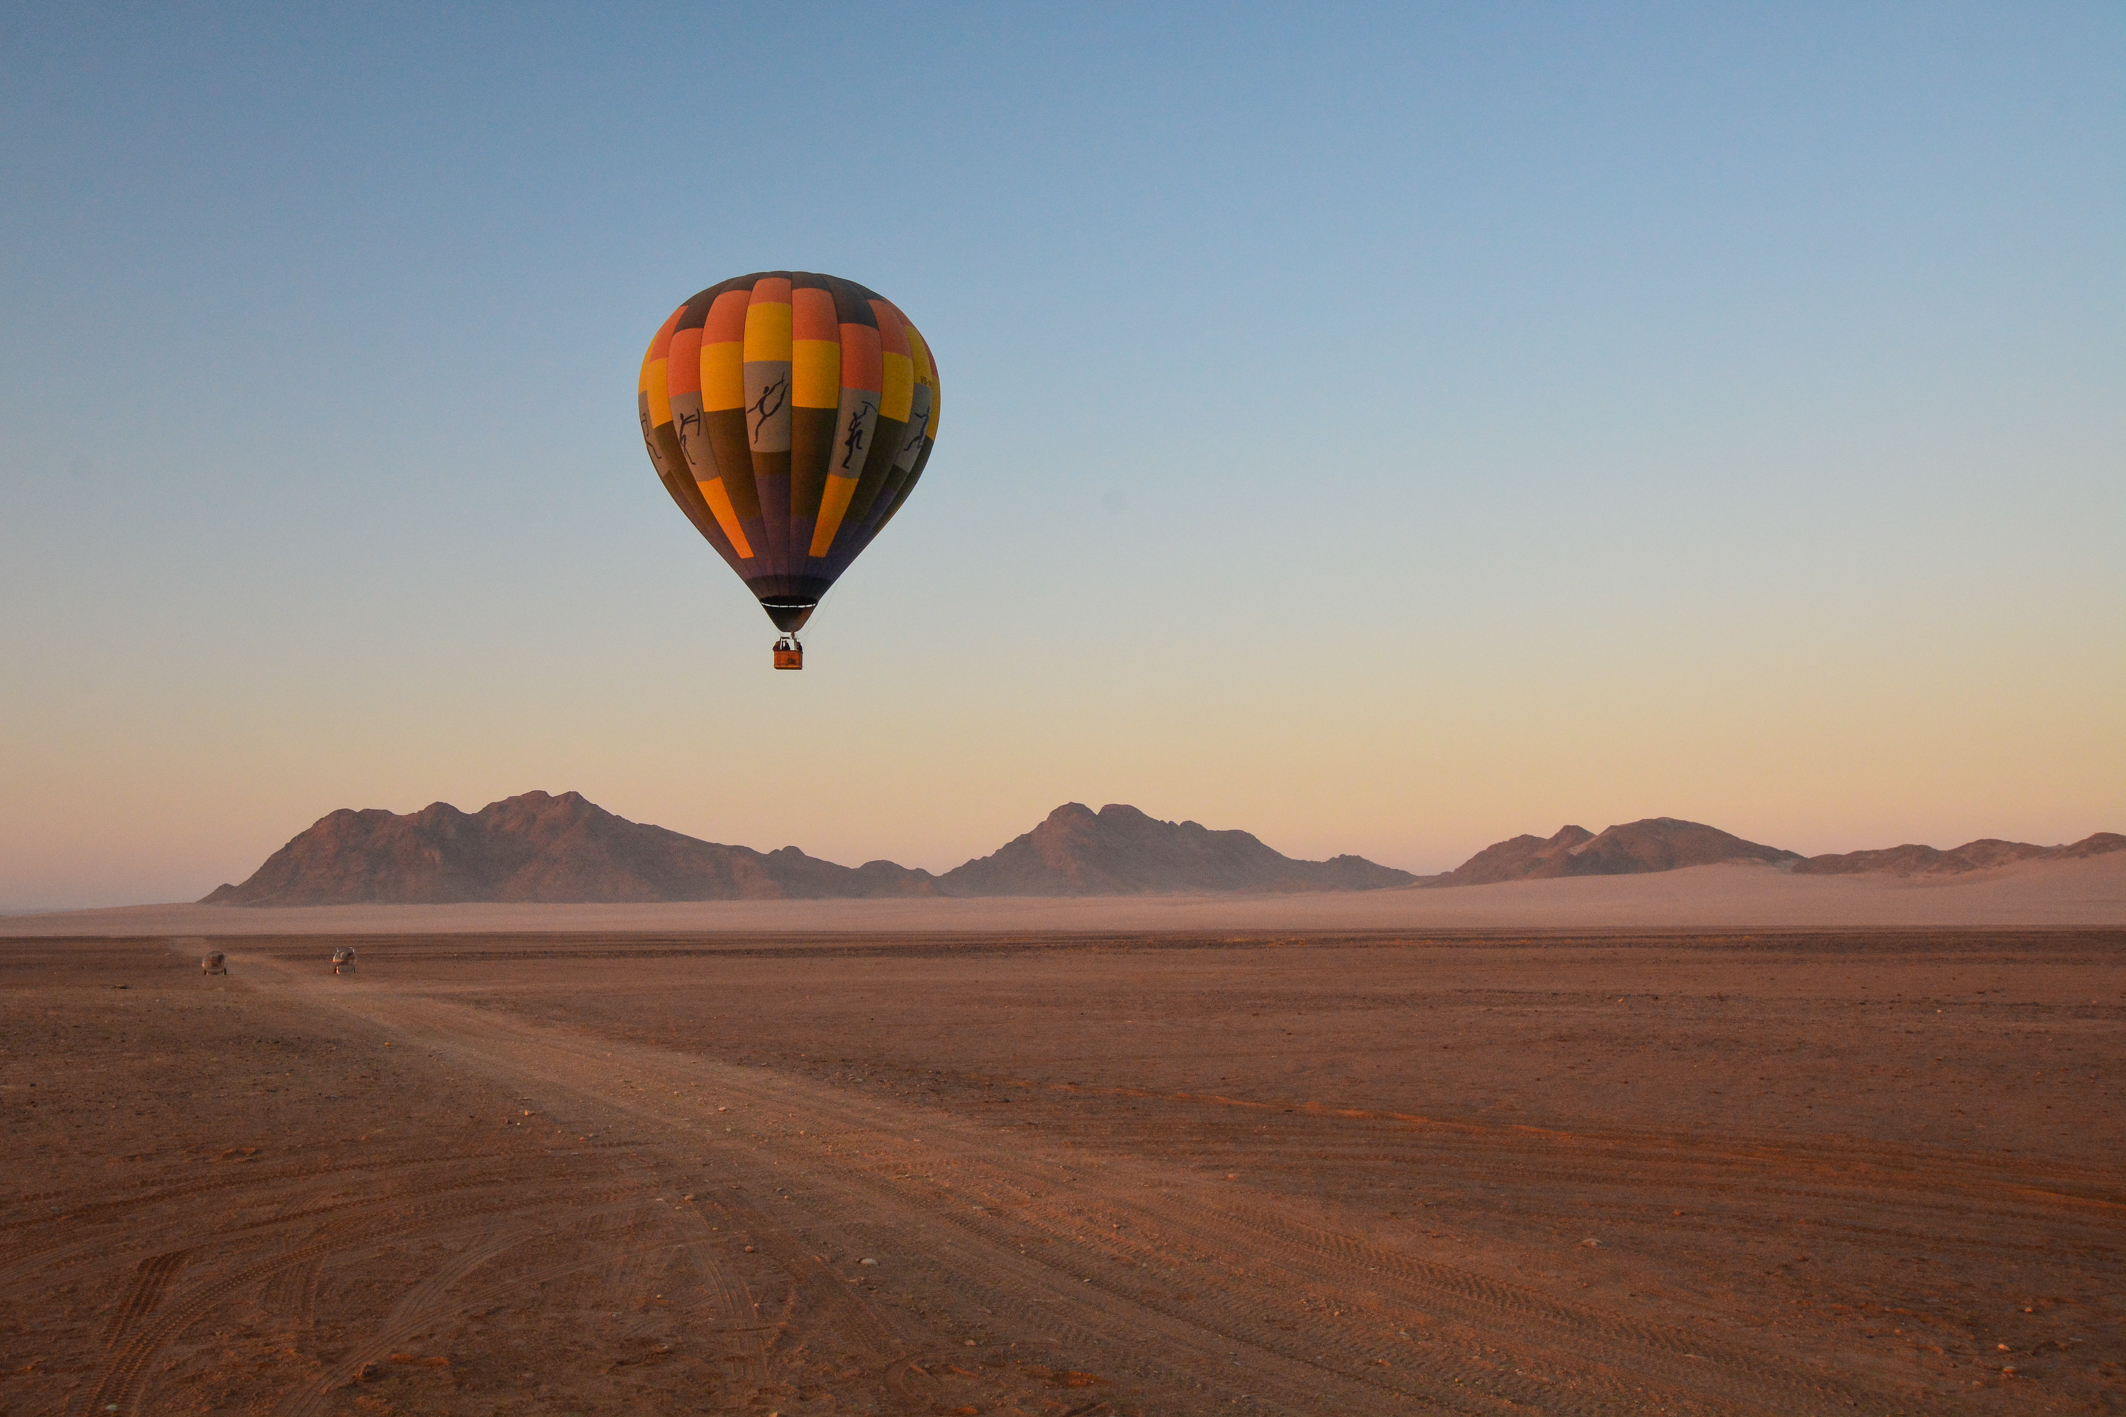 Flying across the Namib Desert in a hot air balloon